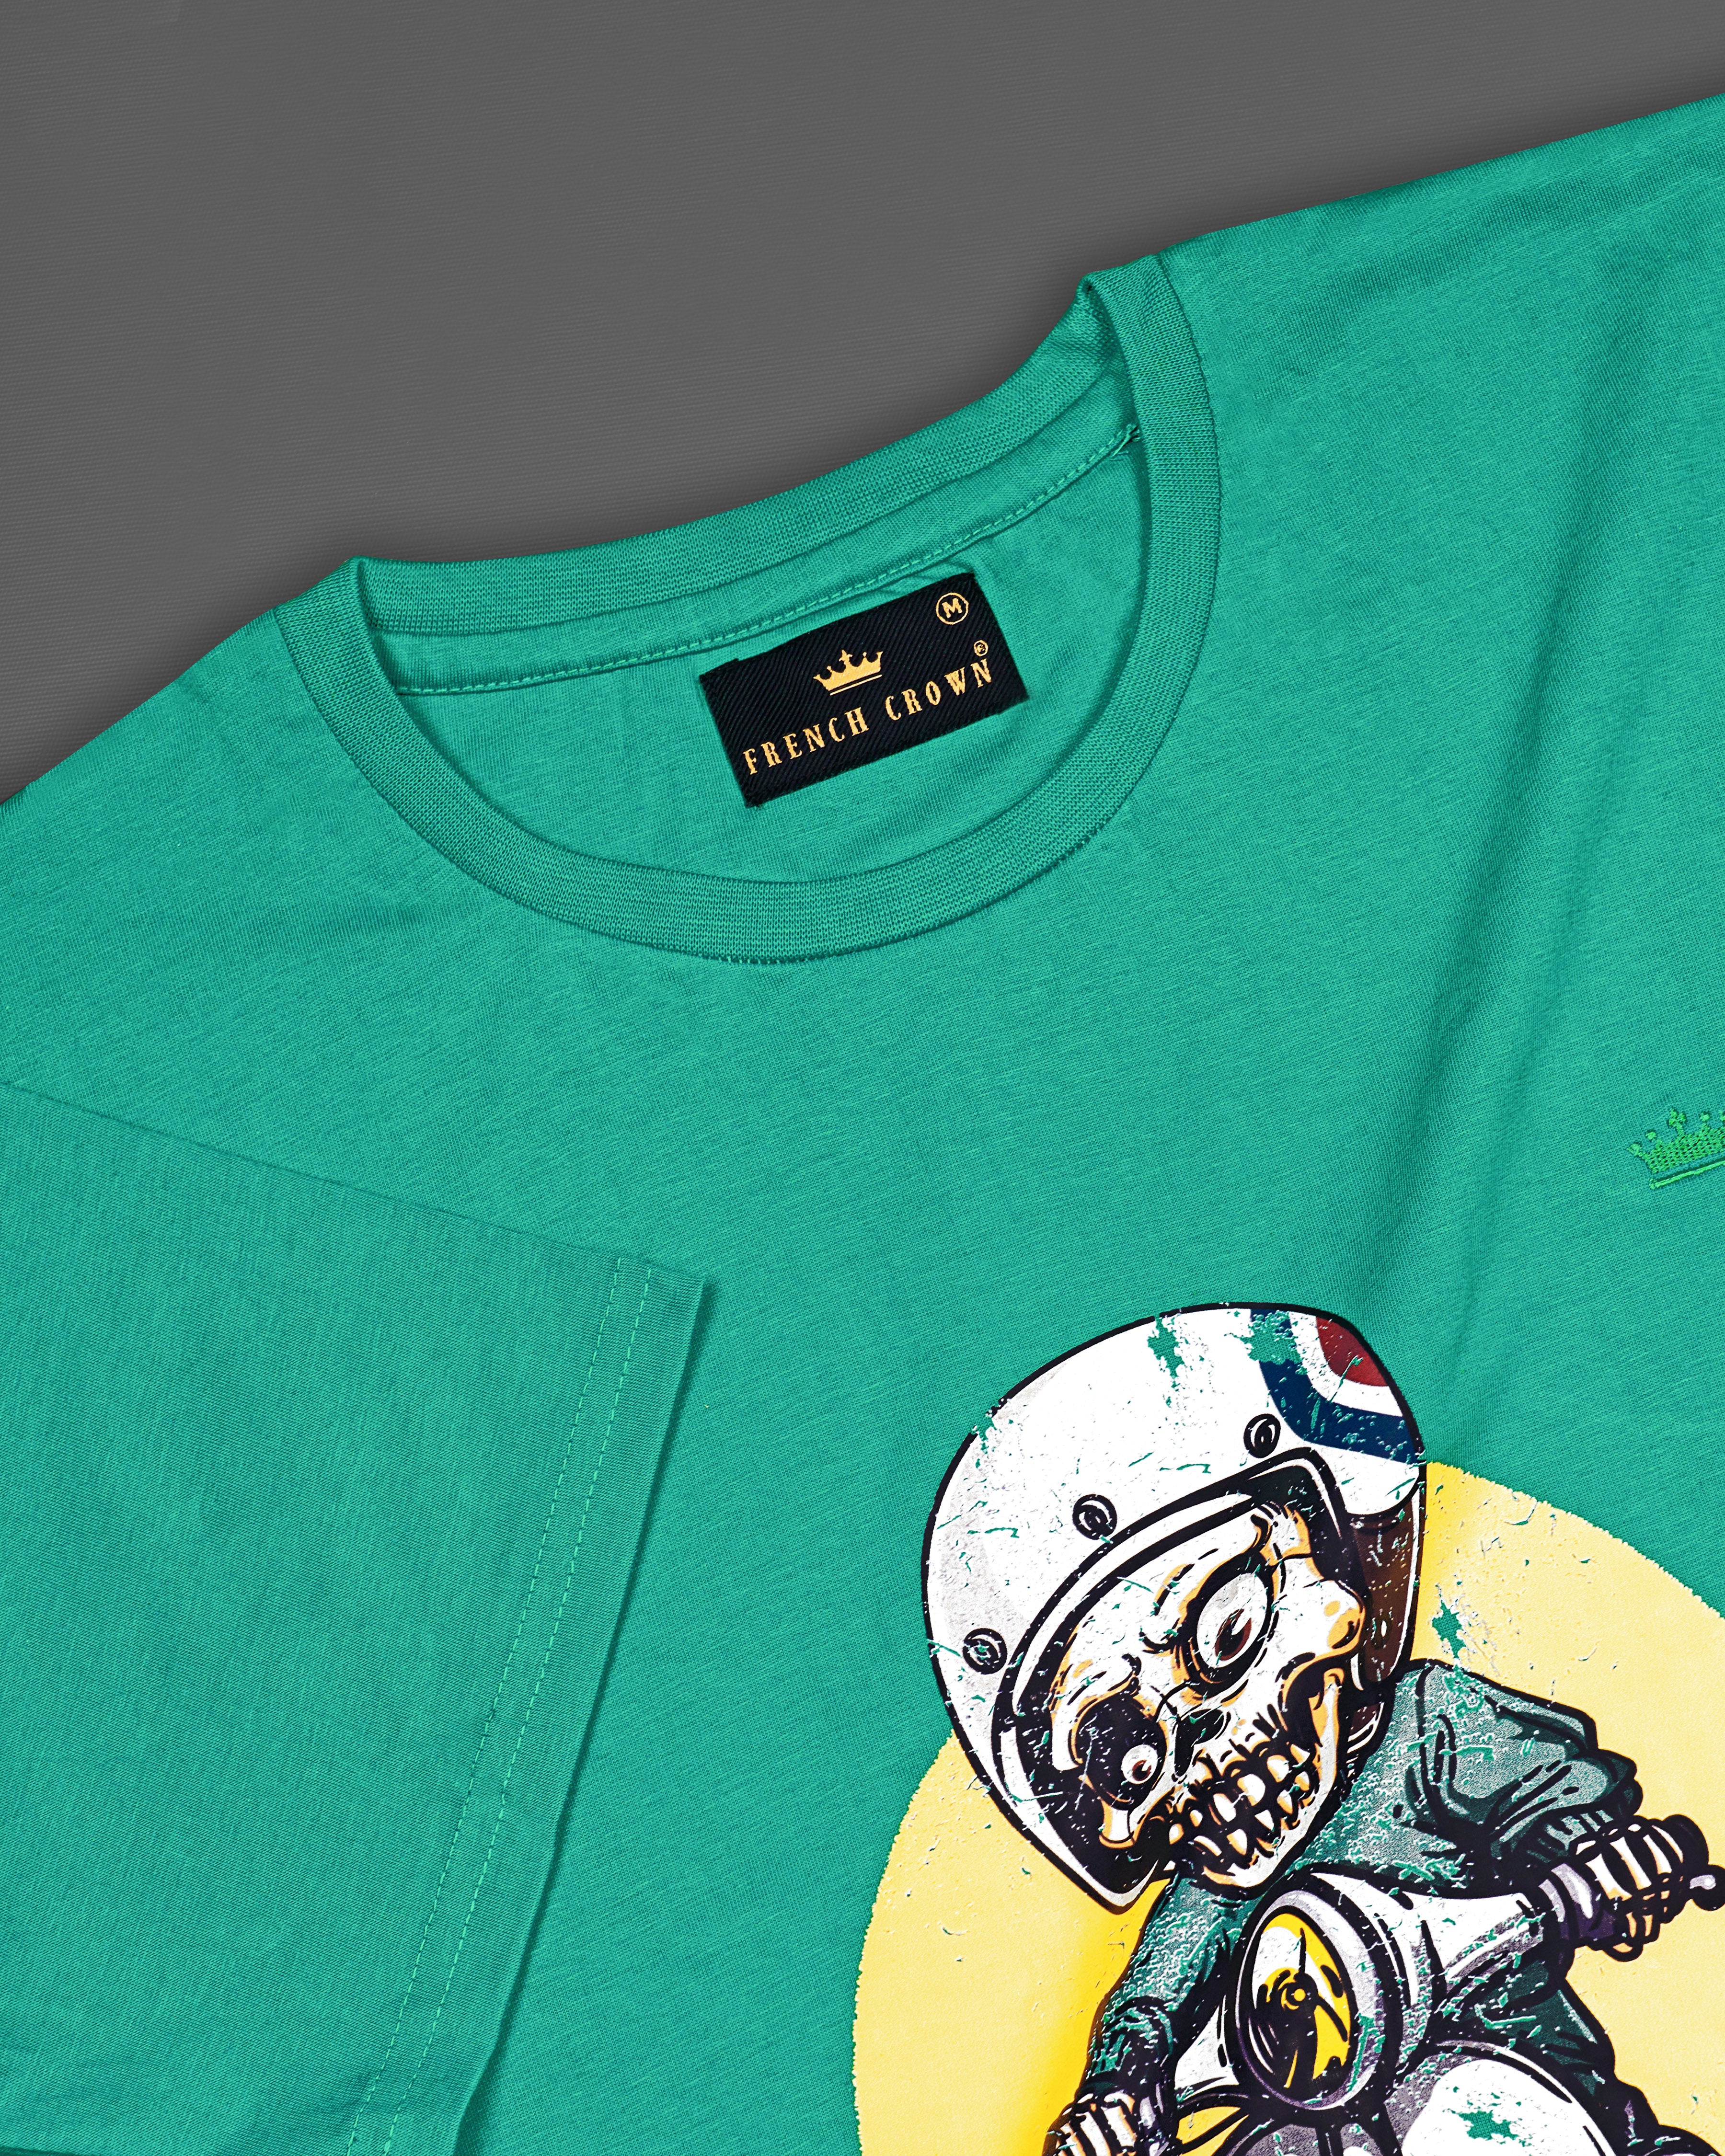 Jade Green Digital Printed Organic Cotton T-shirt TS074-W01-S, TS074-W01-M, TS074-W01-L, TS074-W01-XL, TS074-W01-XXL